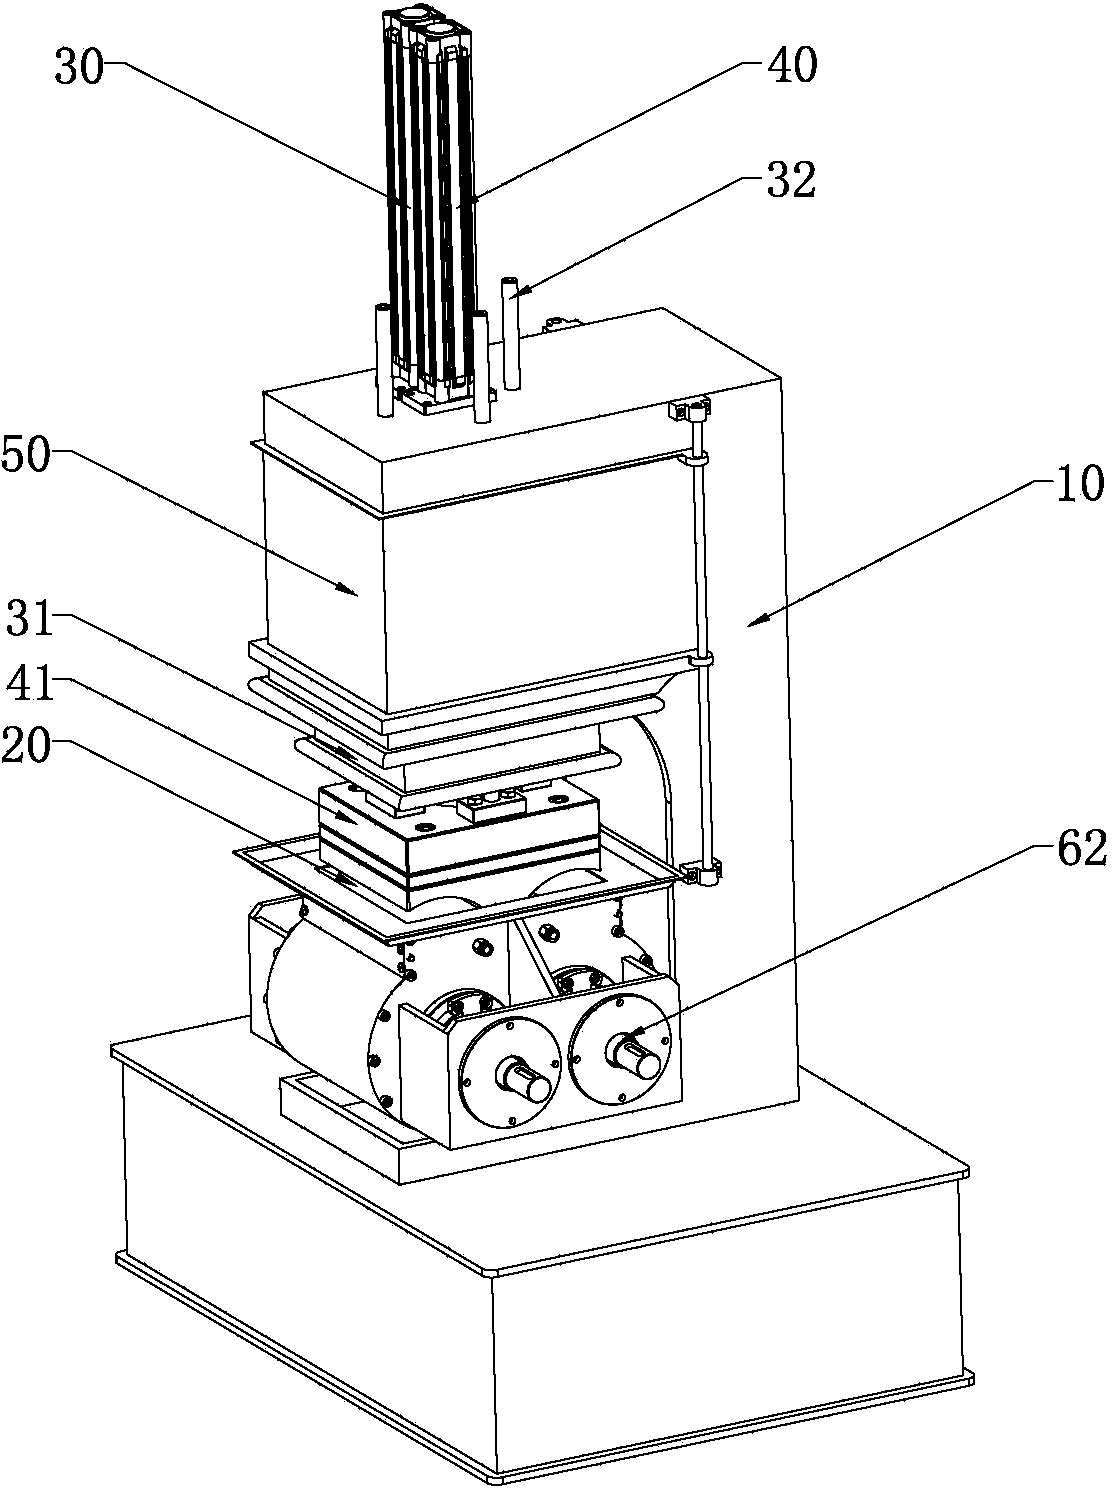 Vacuumizing mixing machine